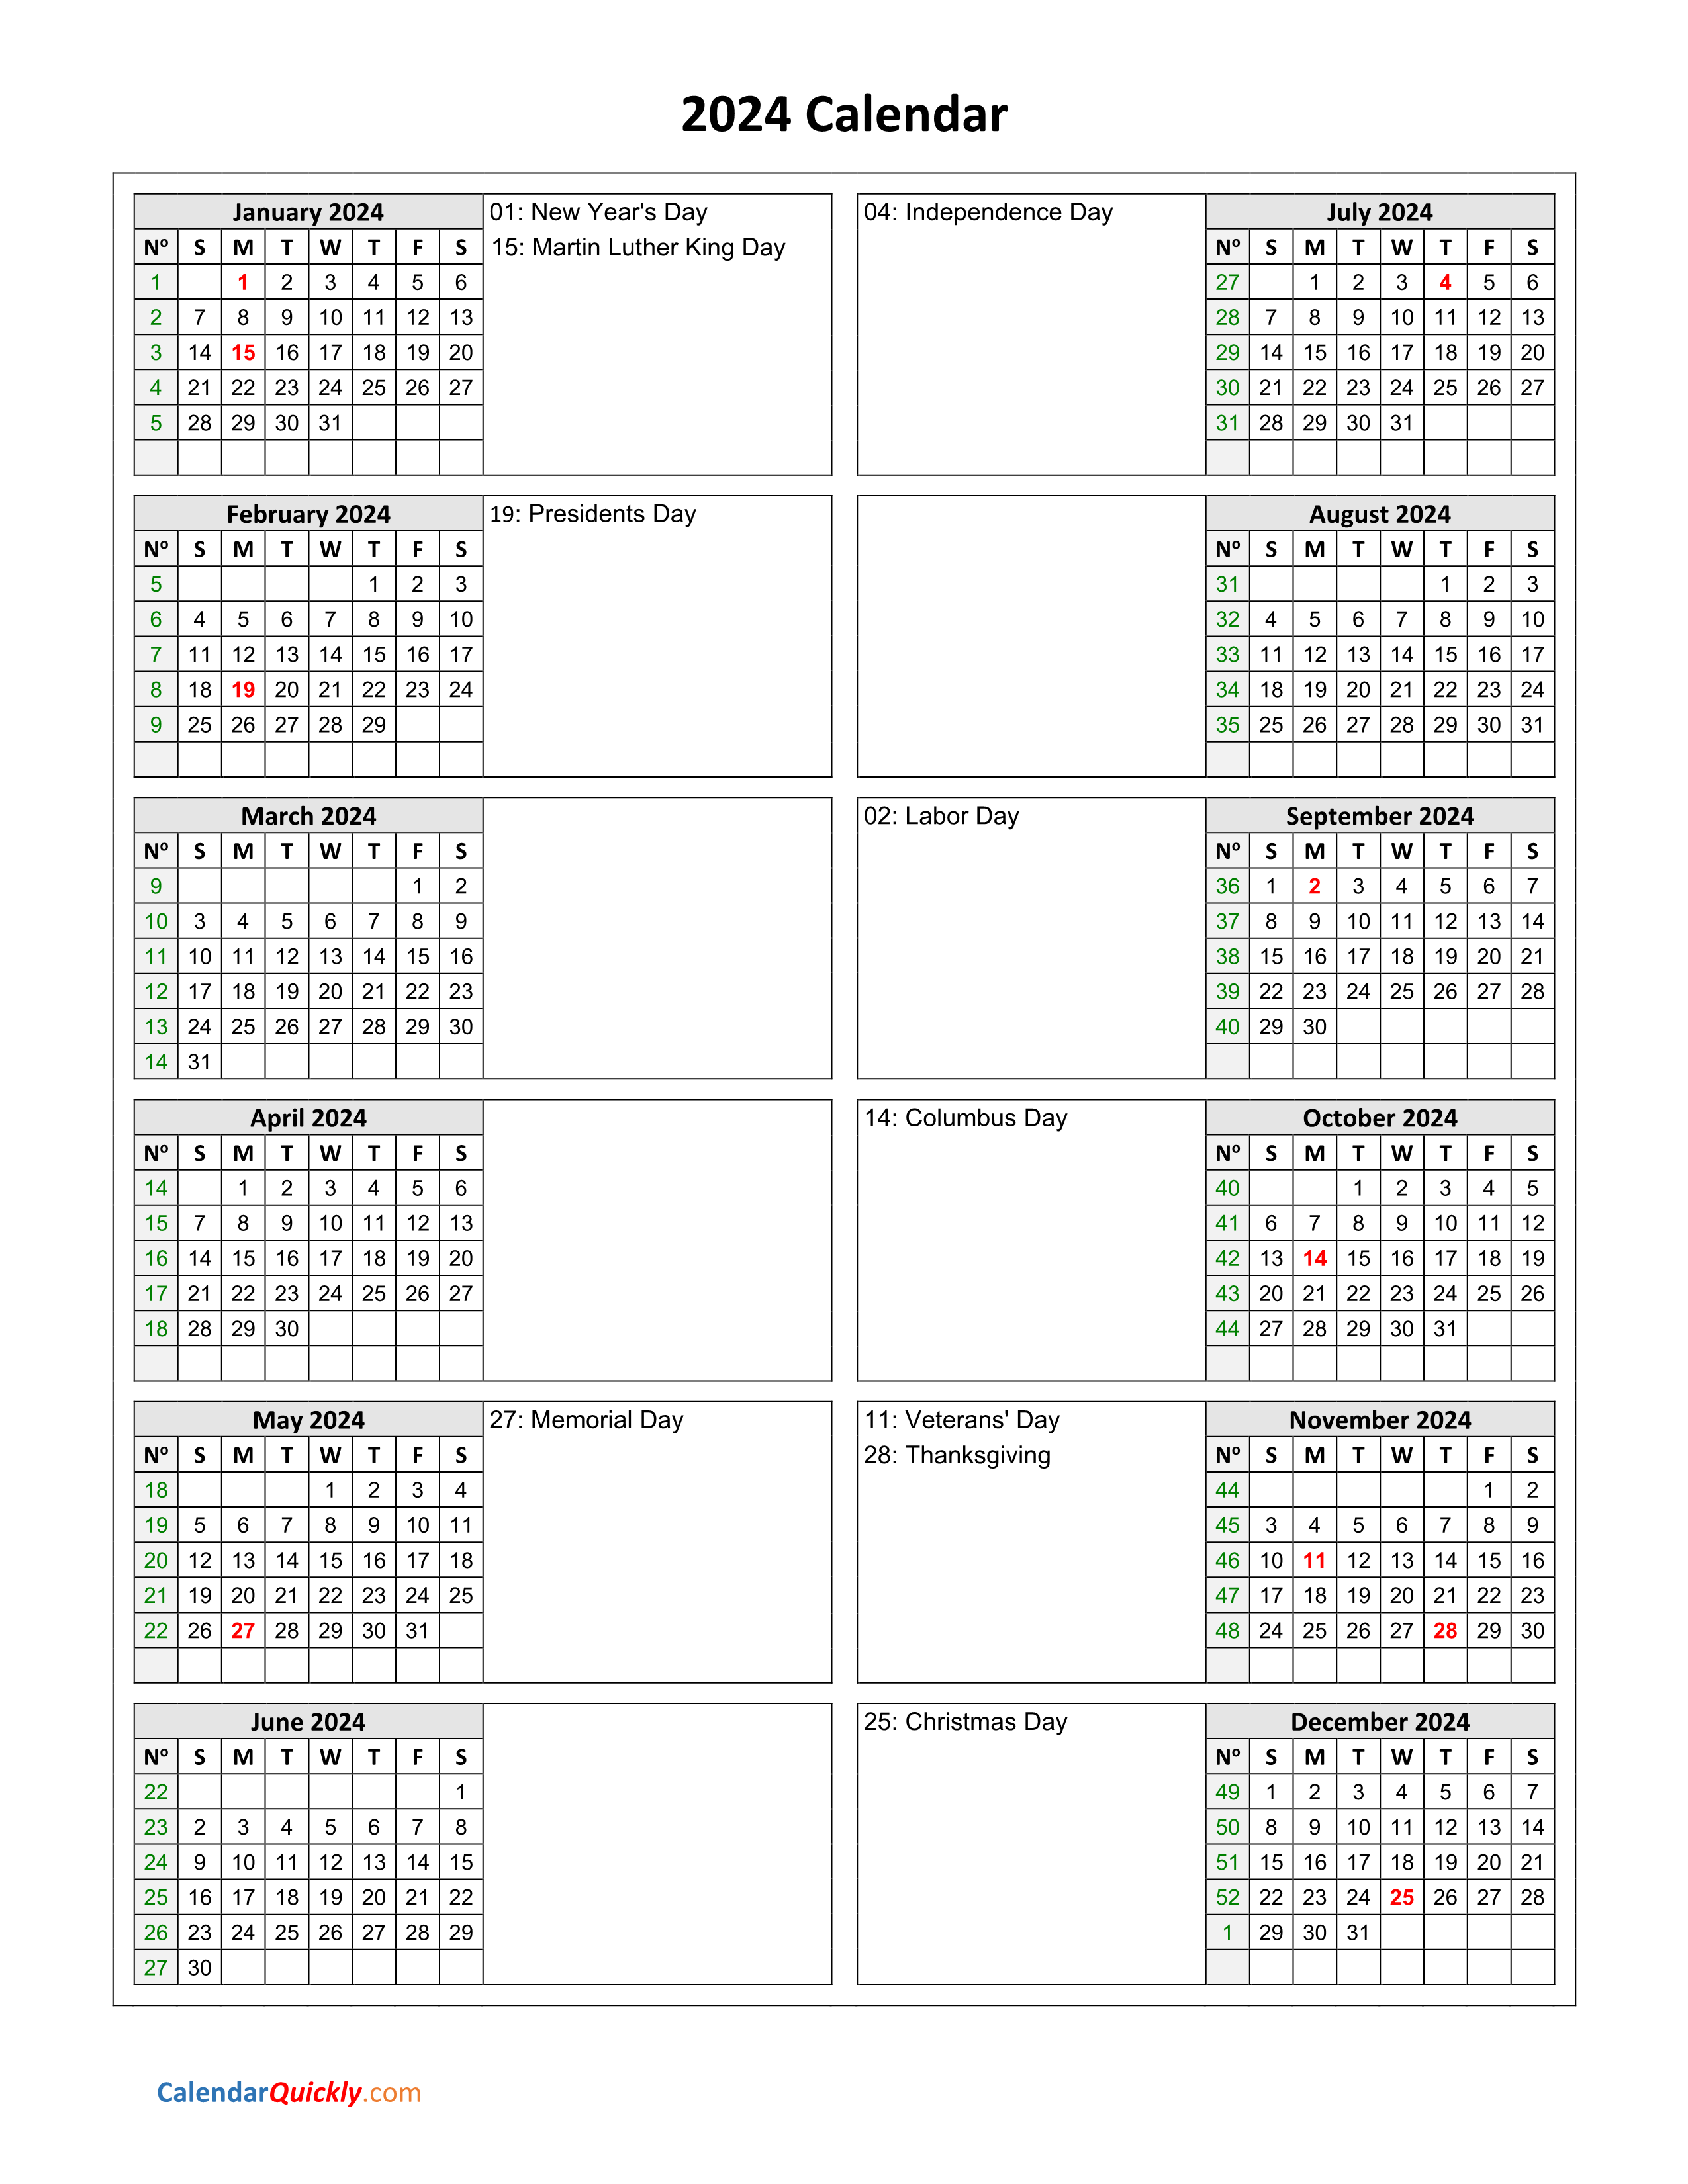 Printable Calendars 2024 Pdf Calendar 2024 With Federal Holidays - Free Printable 2024 Calendar With Holidays Monthly